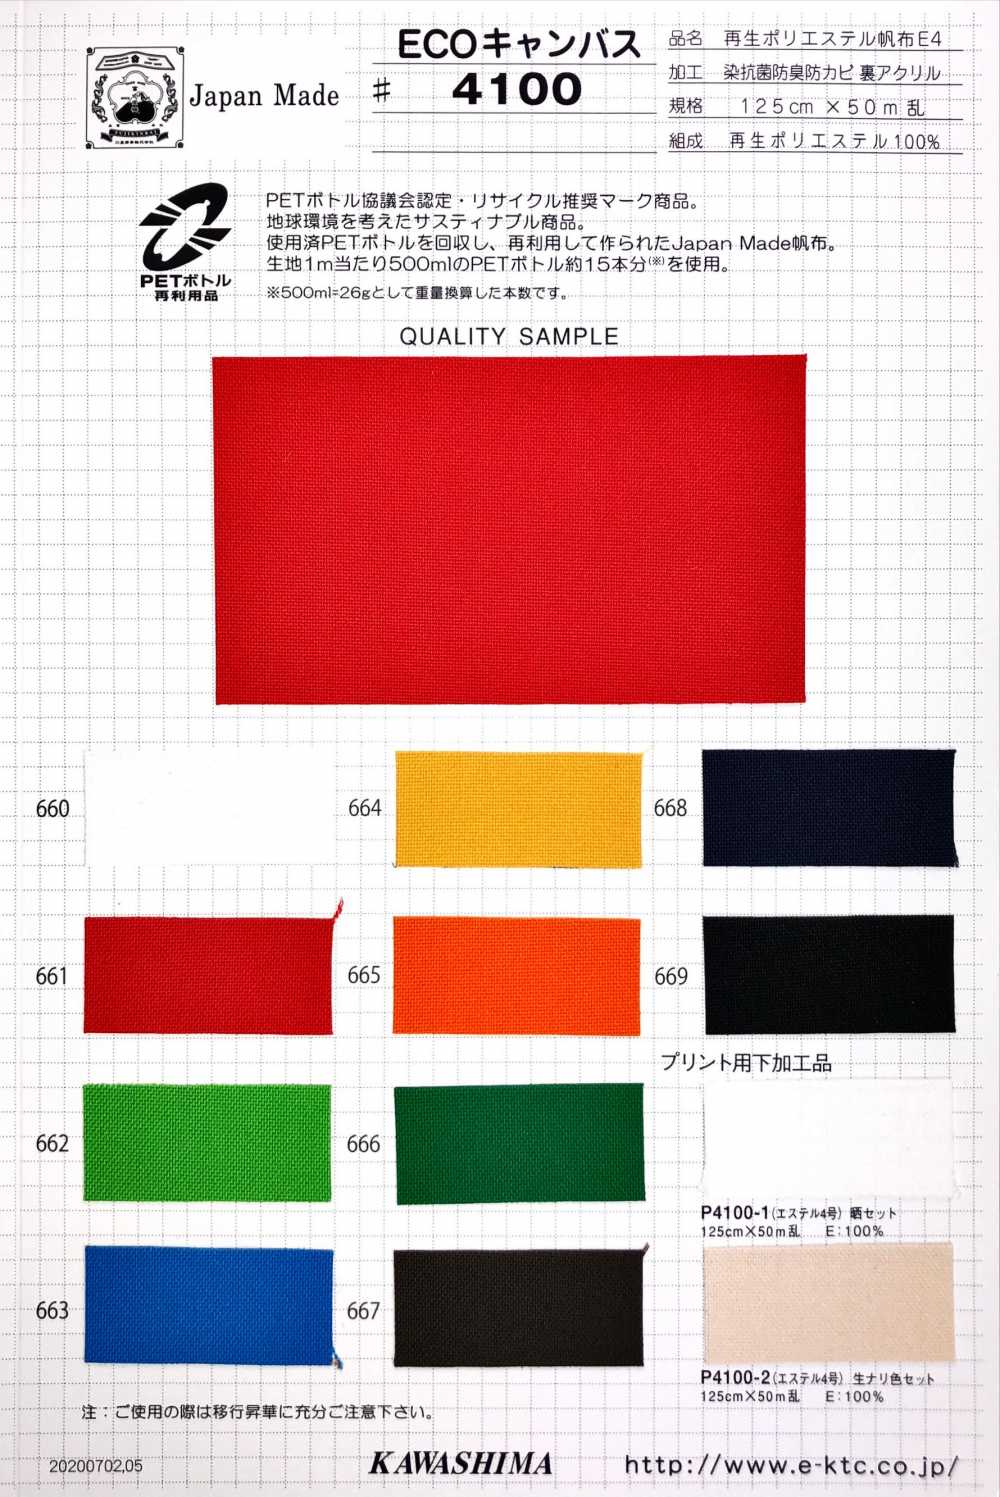 4100 Fujikinbai Recycled Polyester Canvas Antibakterielles Deodorant / Schimmelfeste Acrylbeschichtung Au[Textilgewebe] Fuji Gold Pflaume